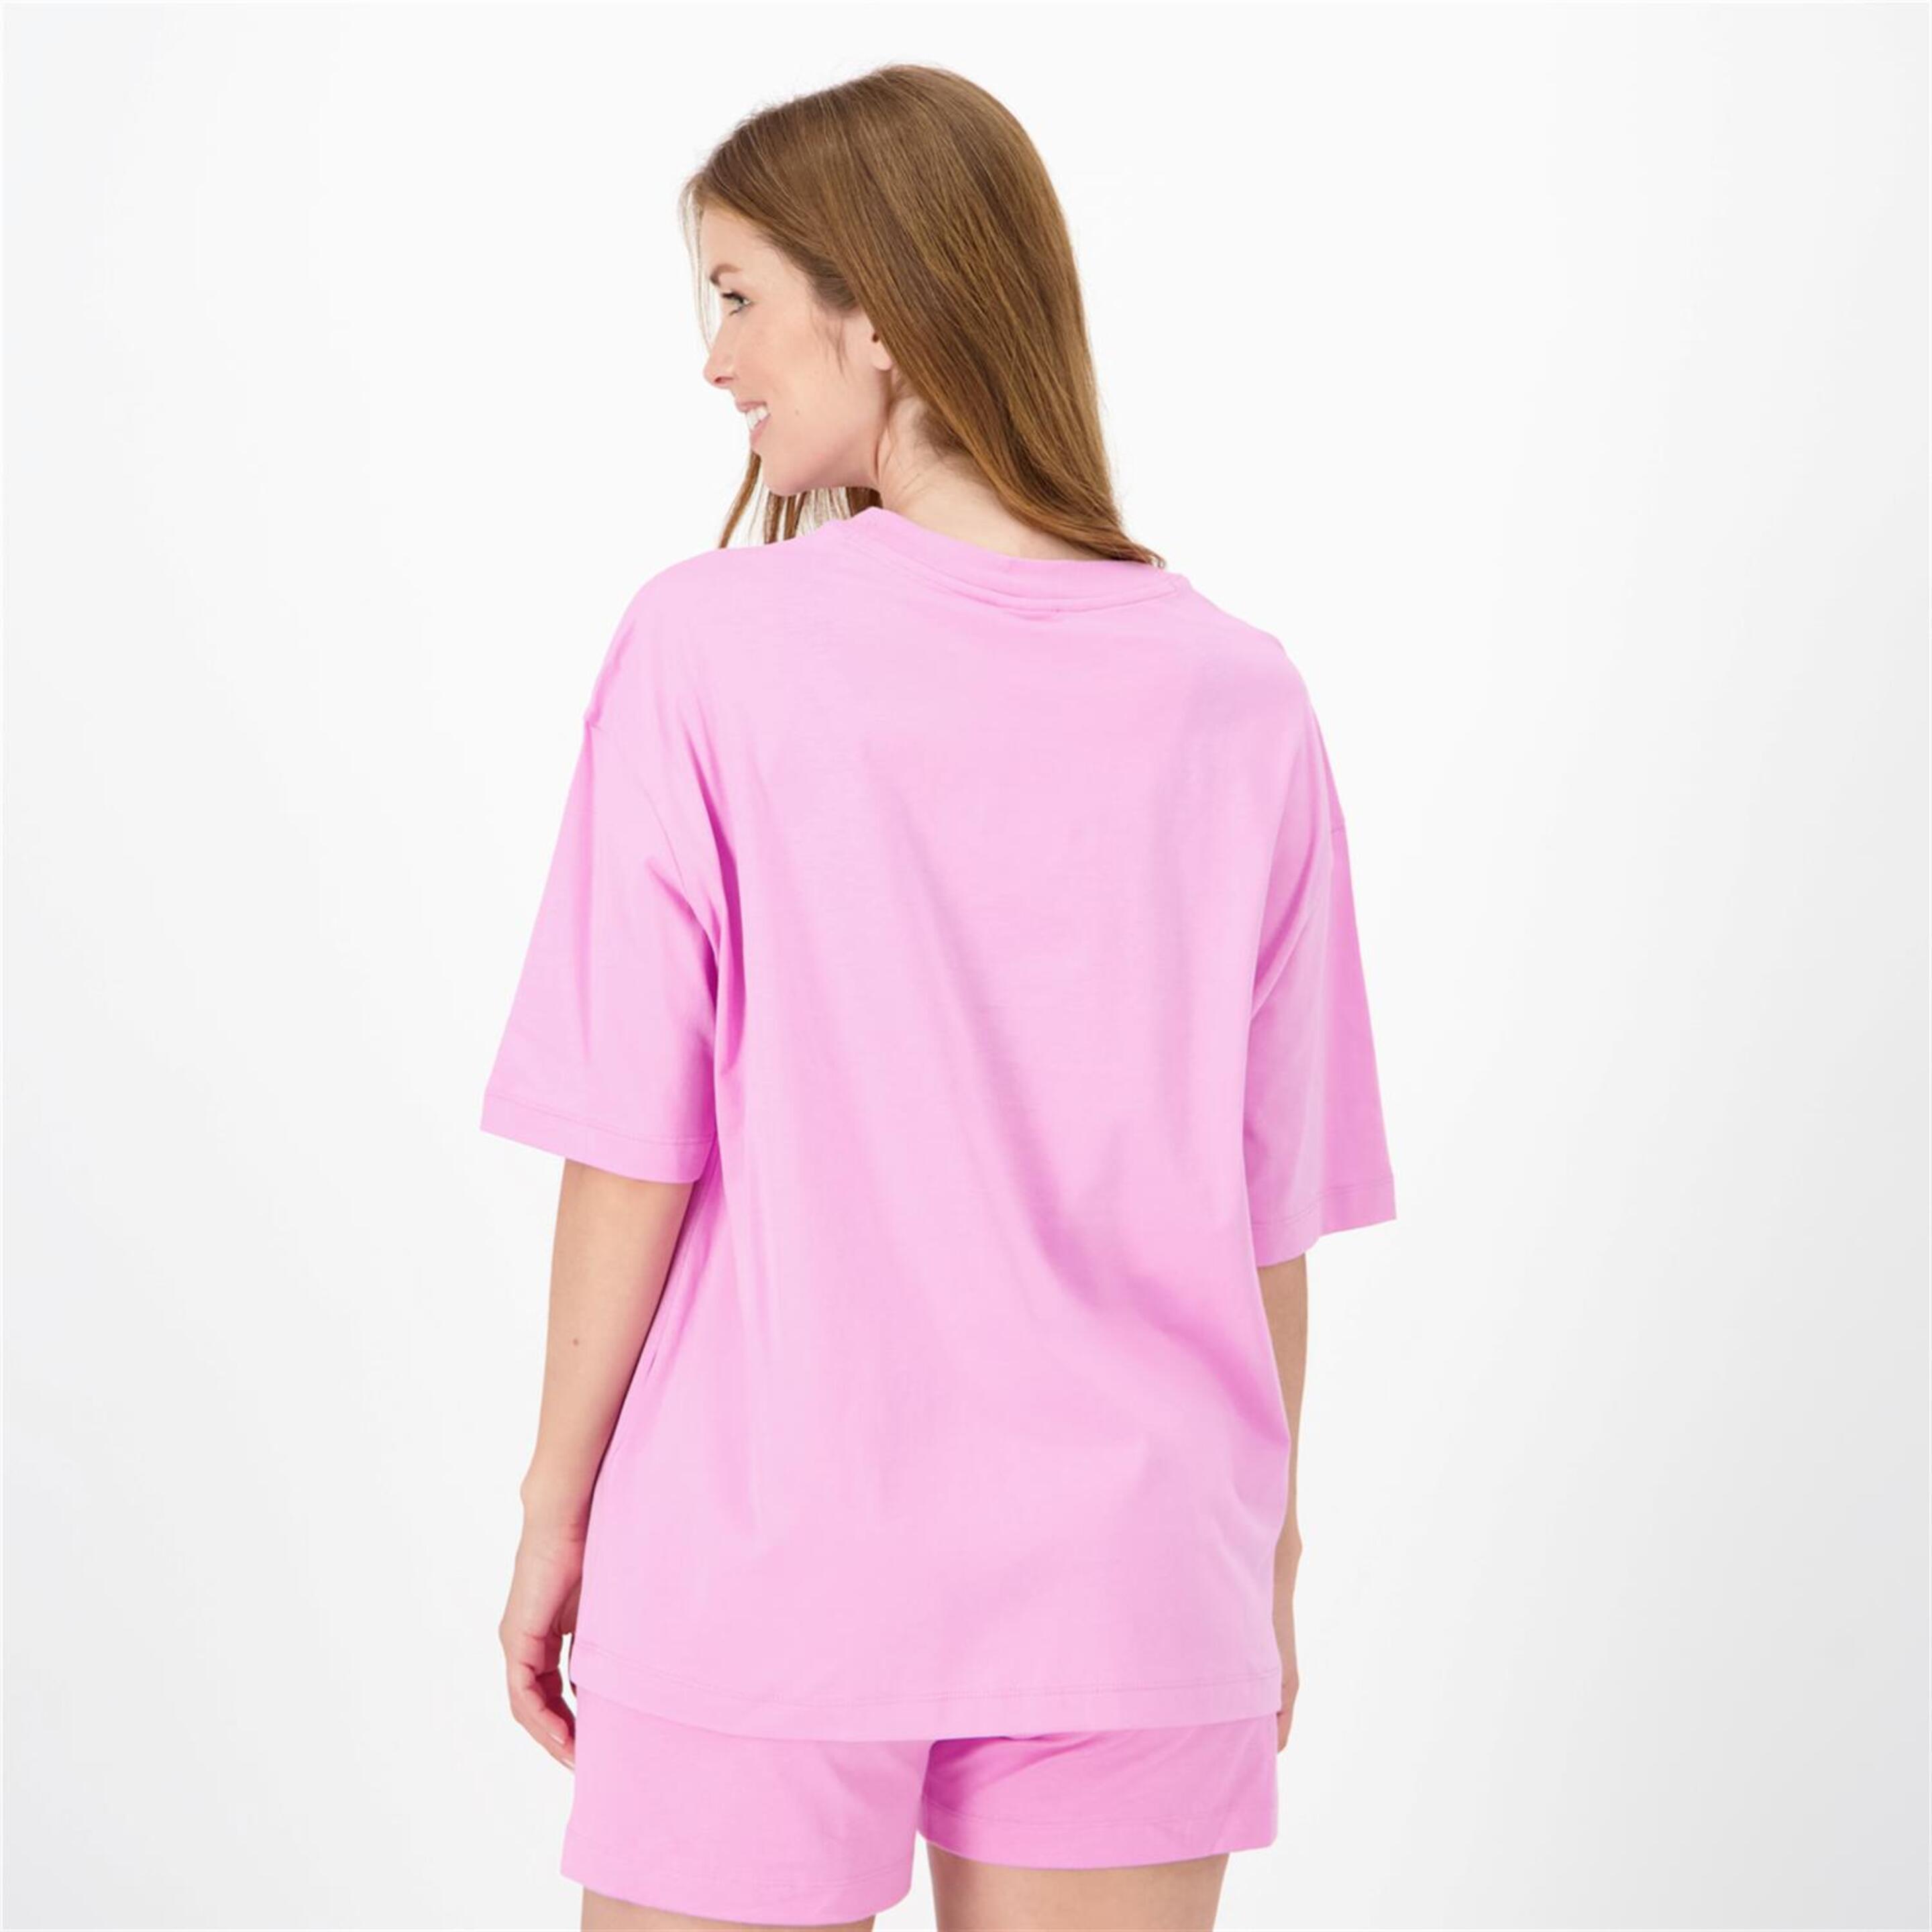 Camiseta Champion - Rosa - Camiseta Mujer